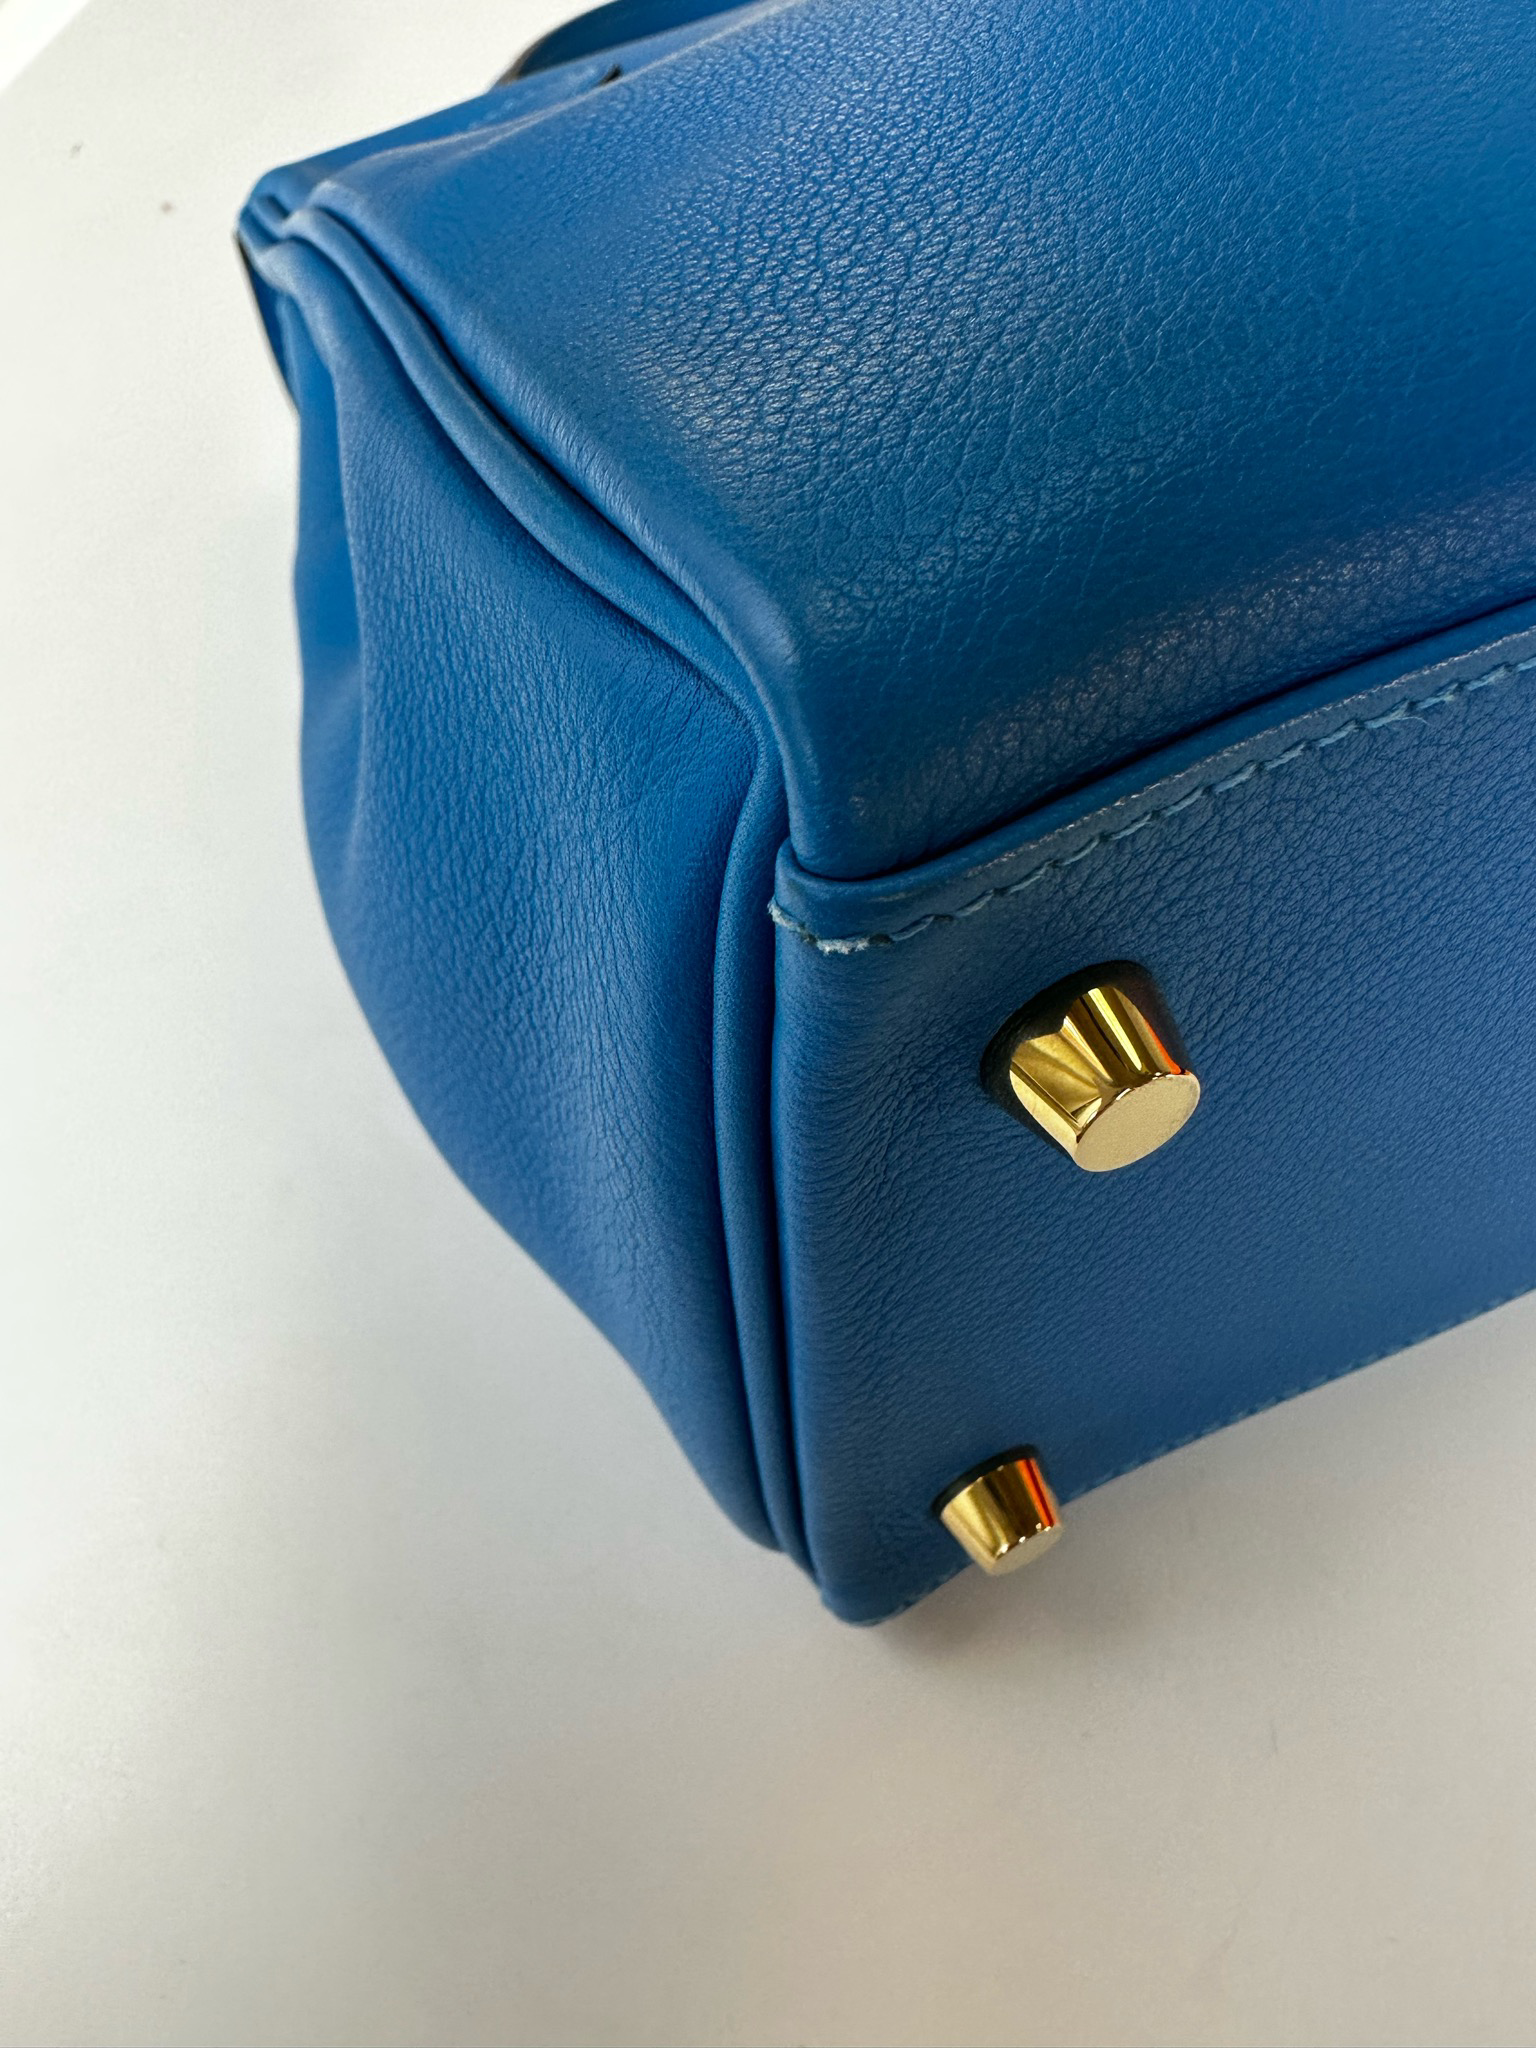 Sold at Auction: Hermès 28cm Blue Glacier Evercolor Leather Retourne Kelly  Bag with Gold Hardware